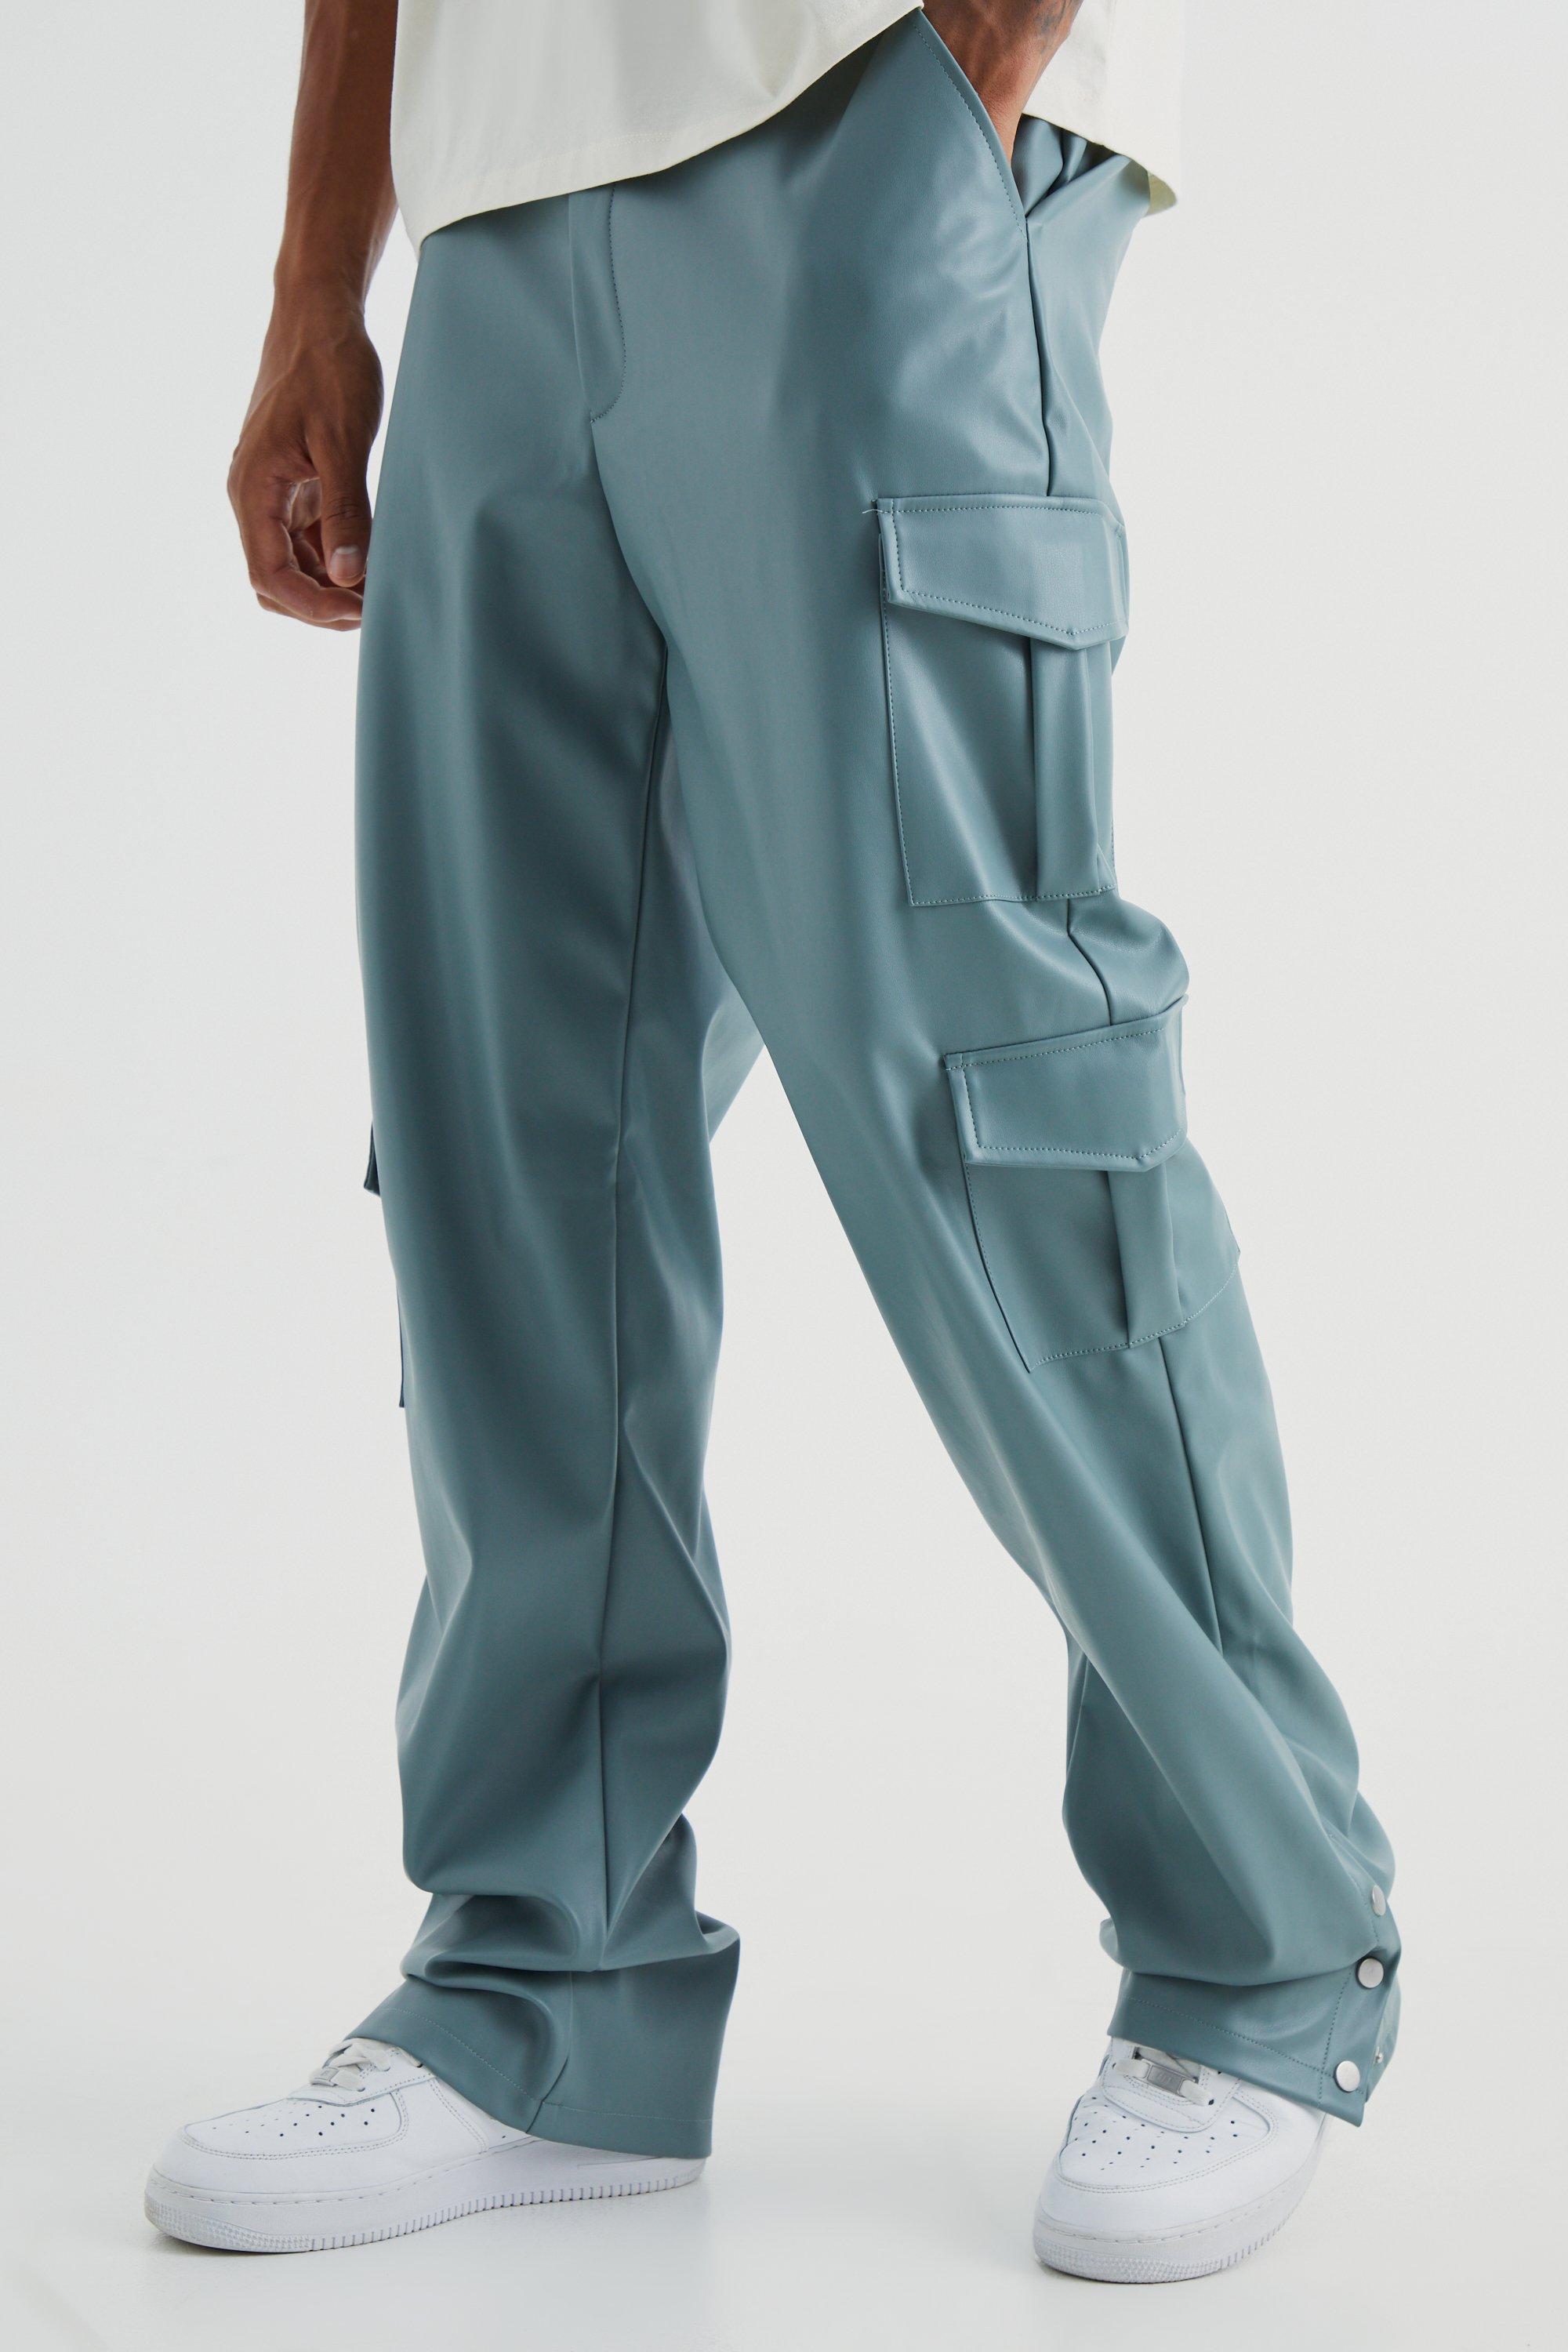 tall - pantalon cargo ample en simili homme - bleu - 34, bleu